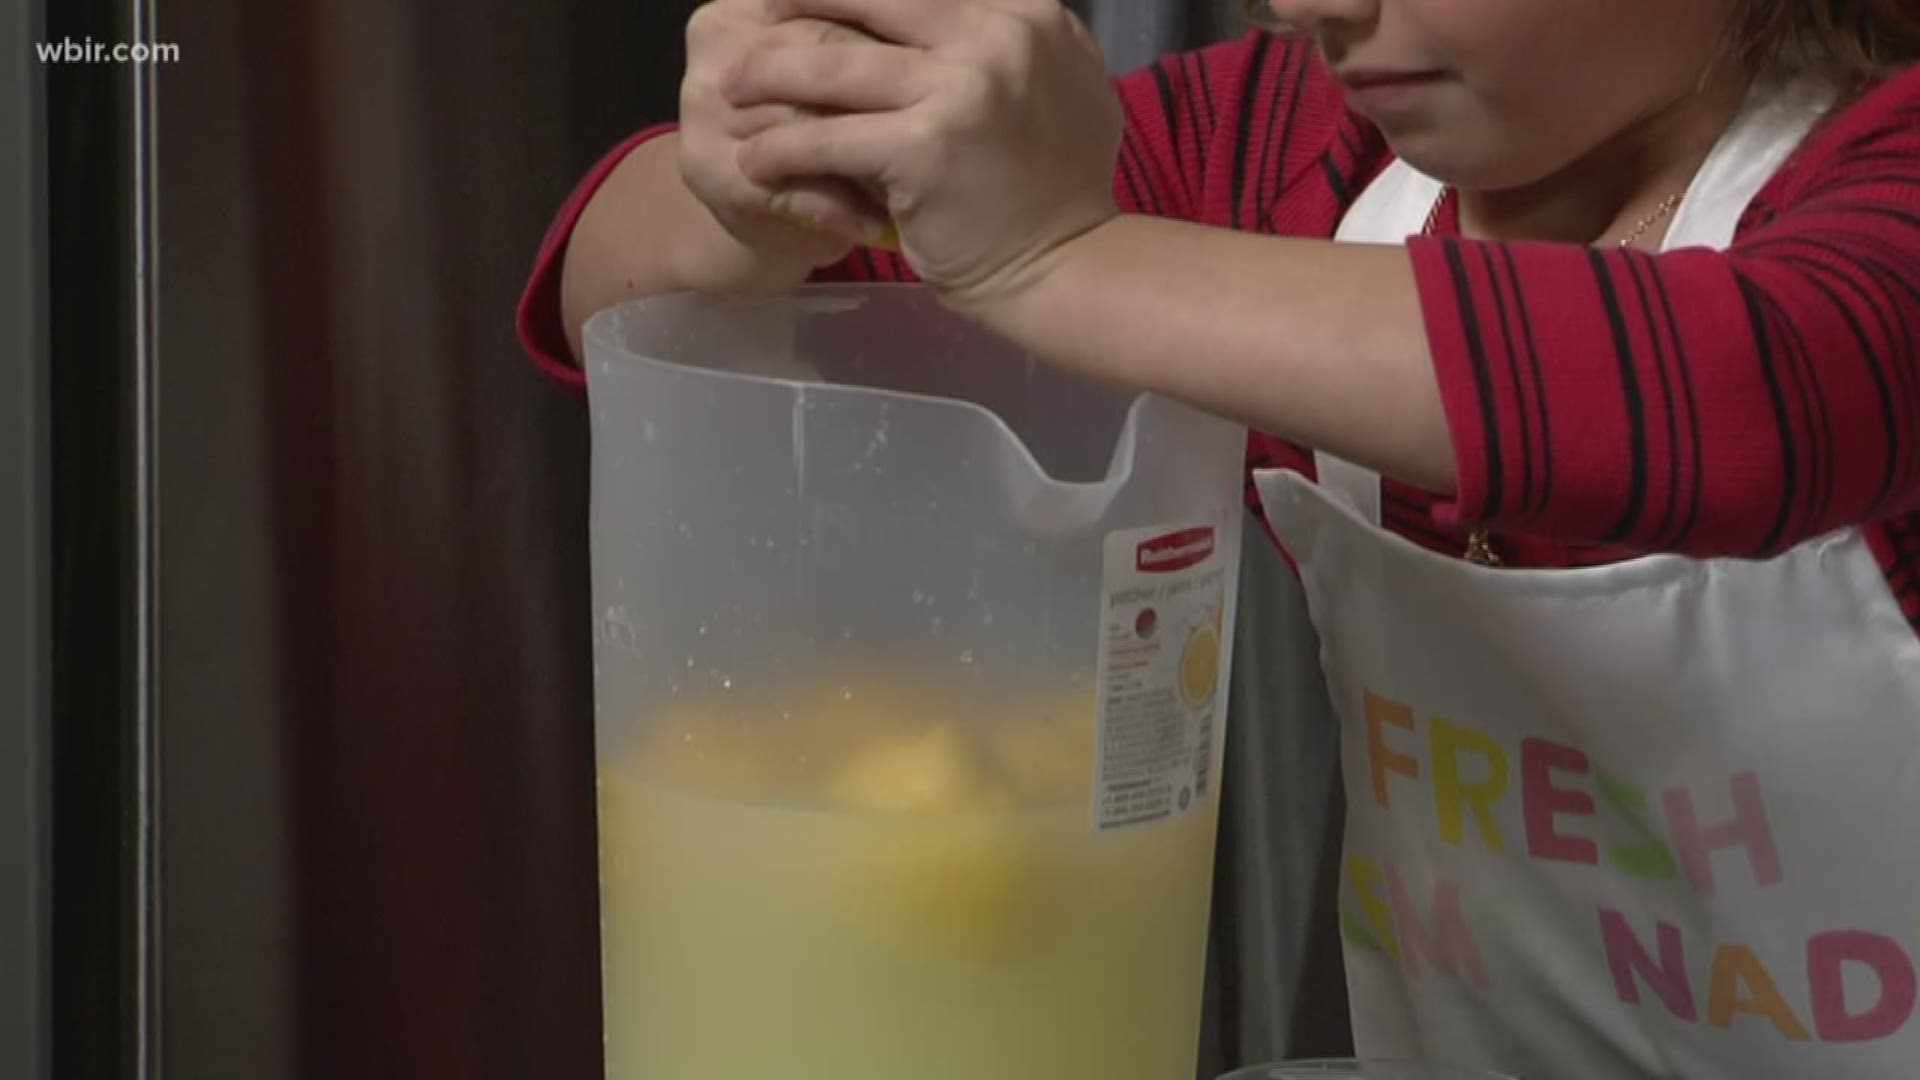 Our Jr. Anchor shares her family's lemonade recipe. Jan. 21, 2020-4pm.